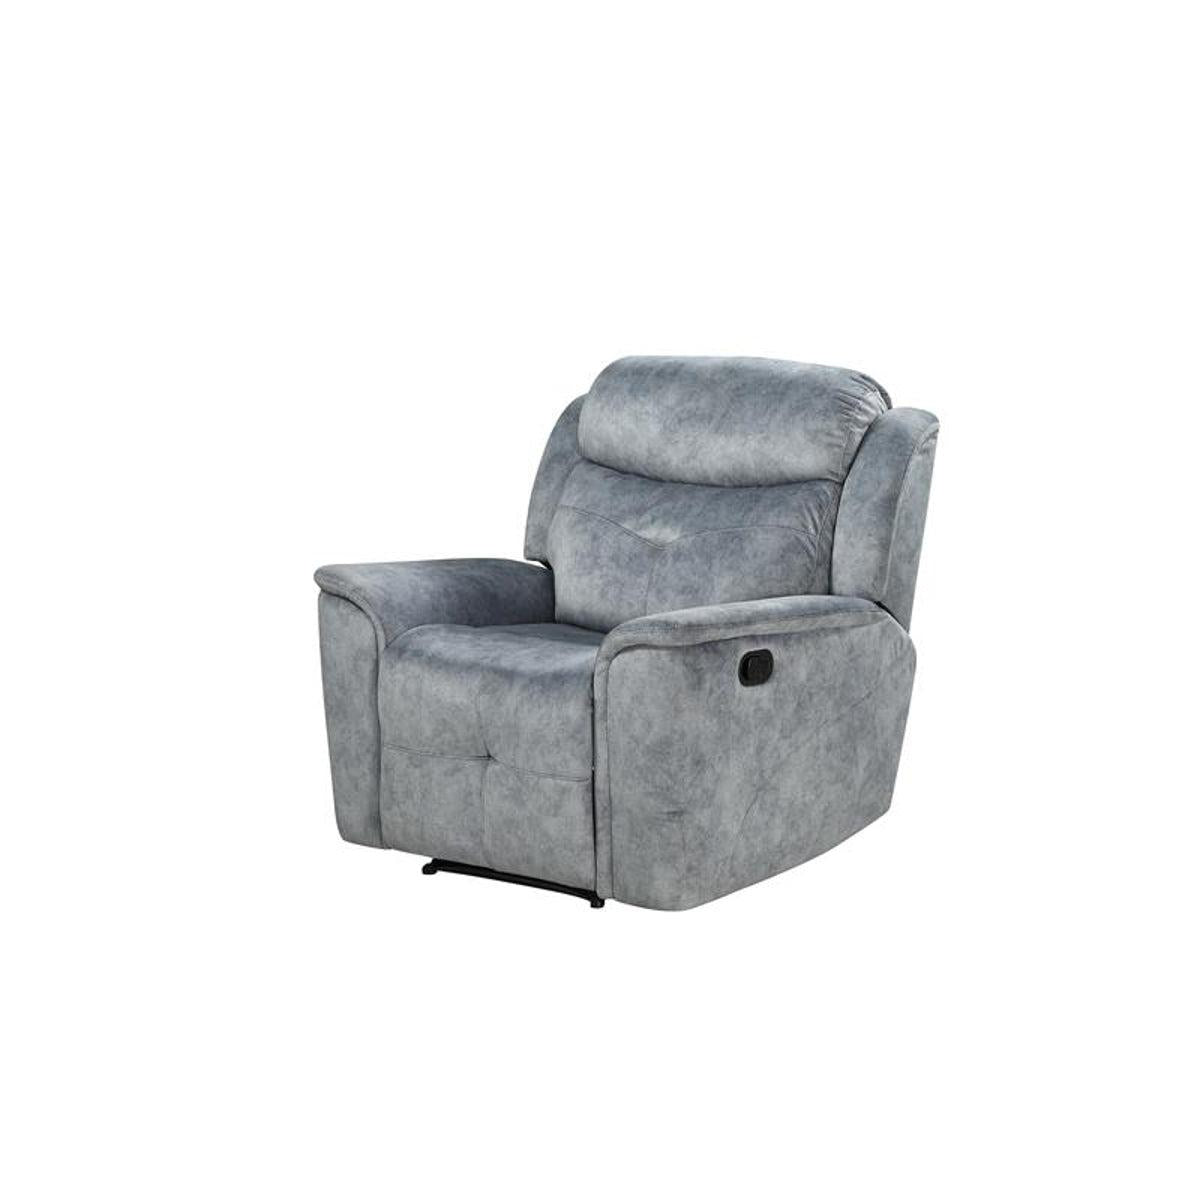 Acme Furniture Mariana Recliner in Silver Gray 55032  Las Vegas Furniture Stores